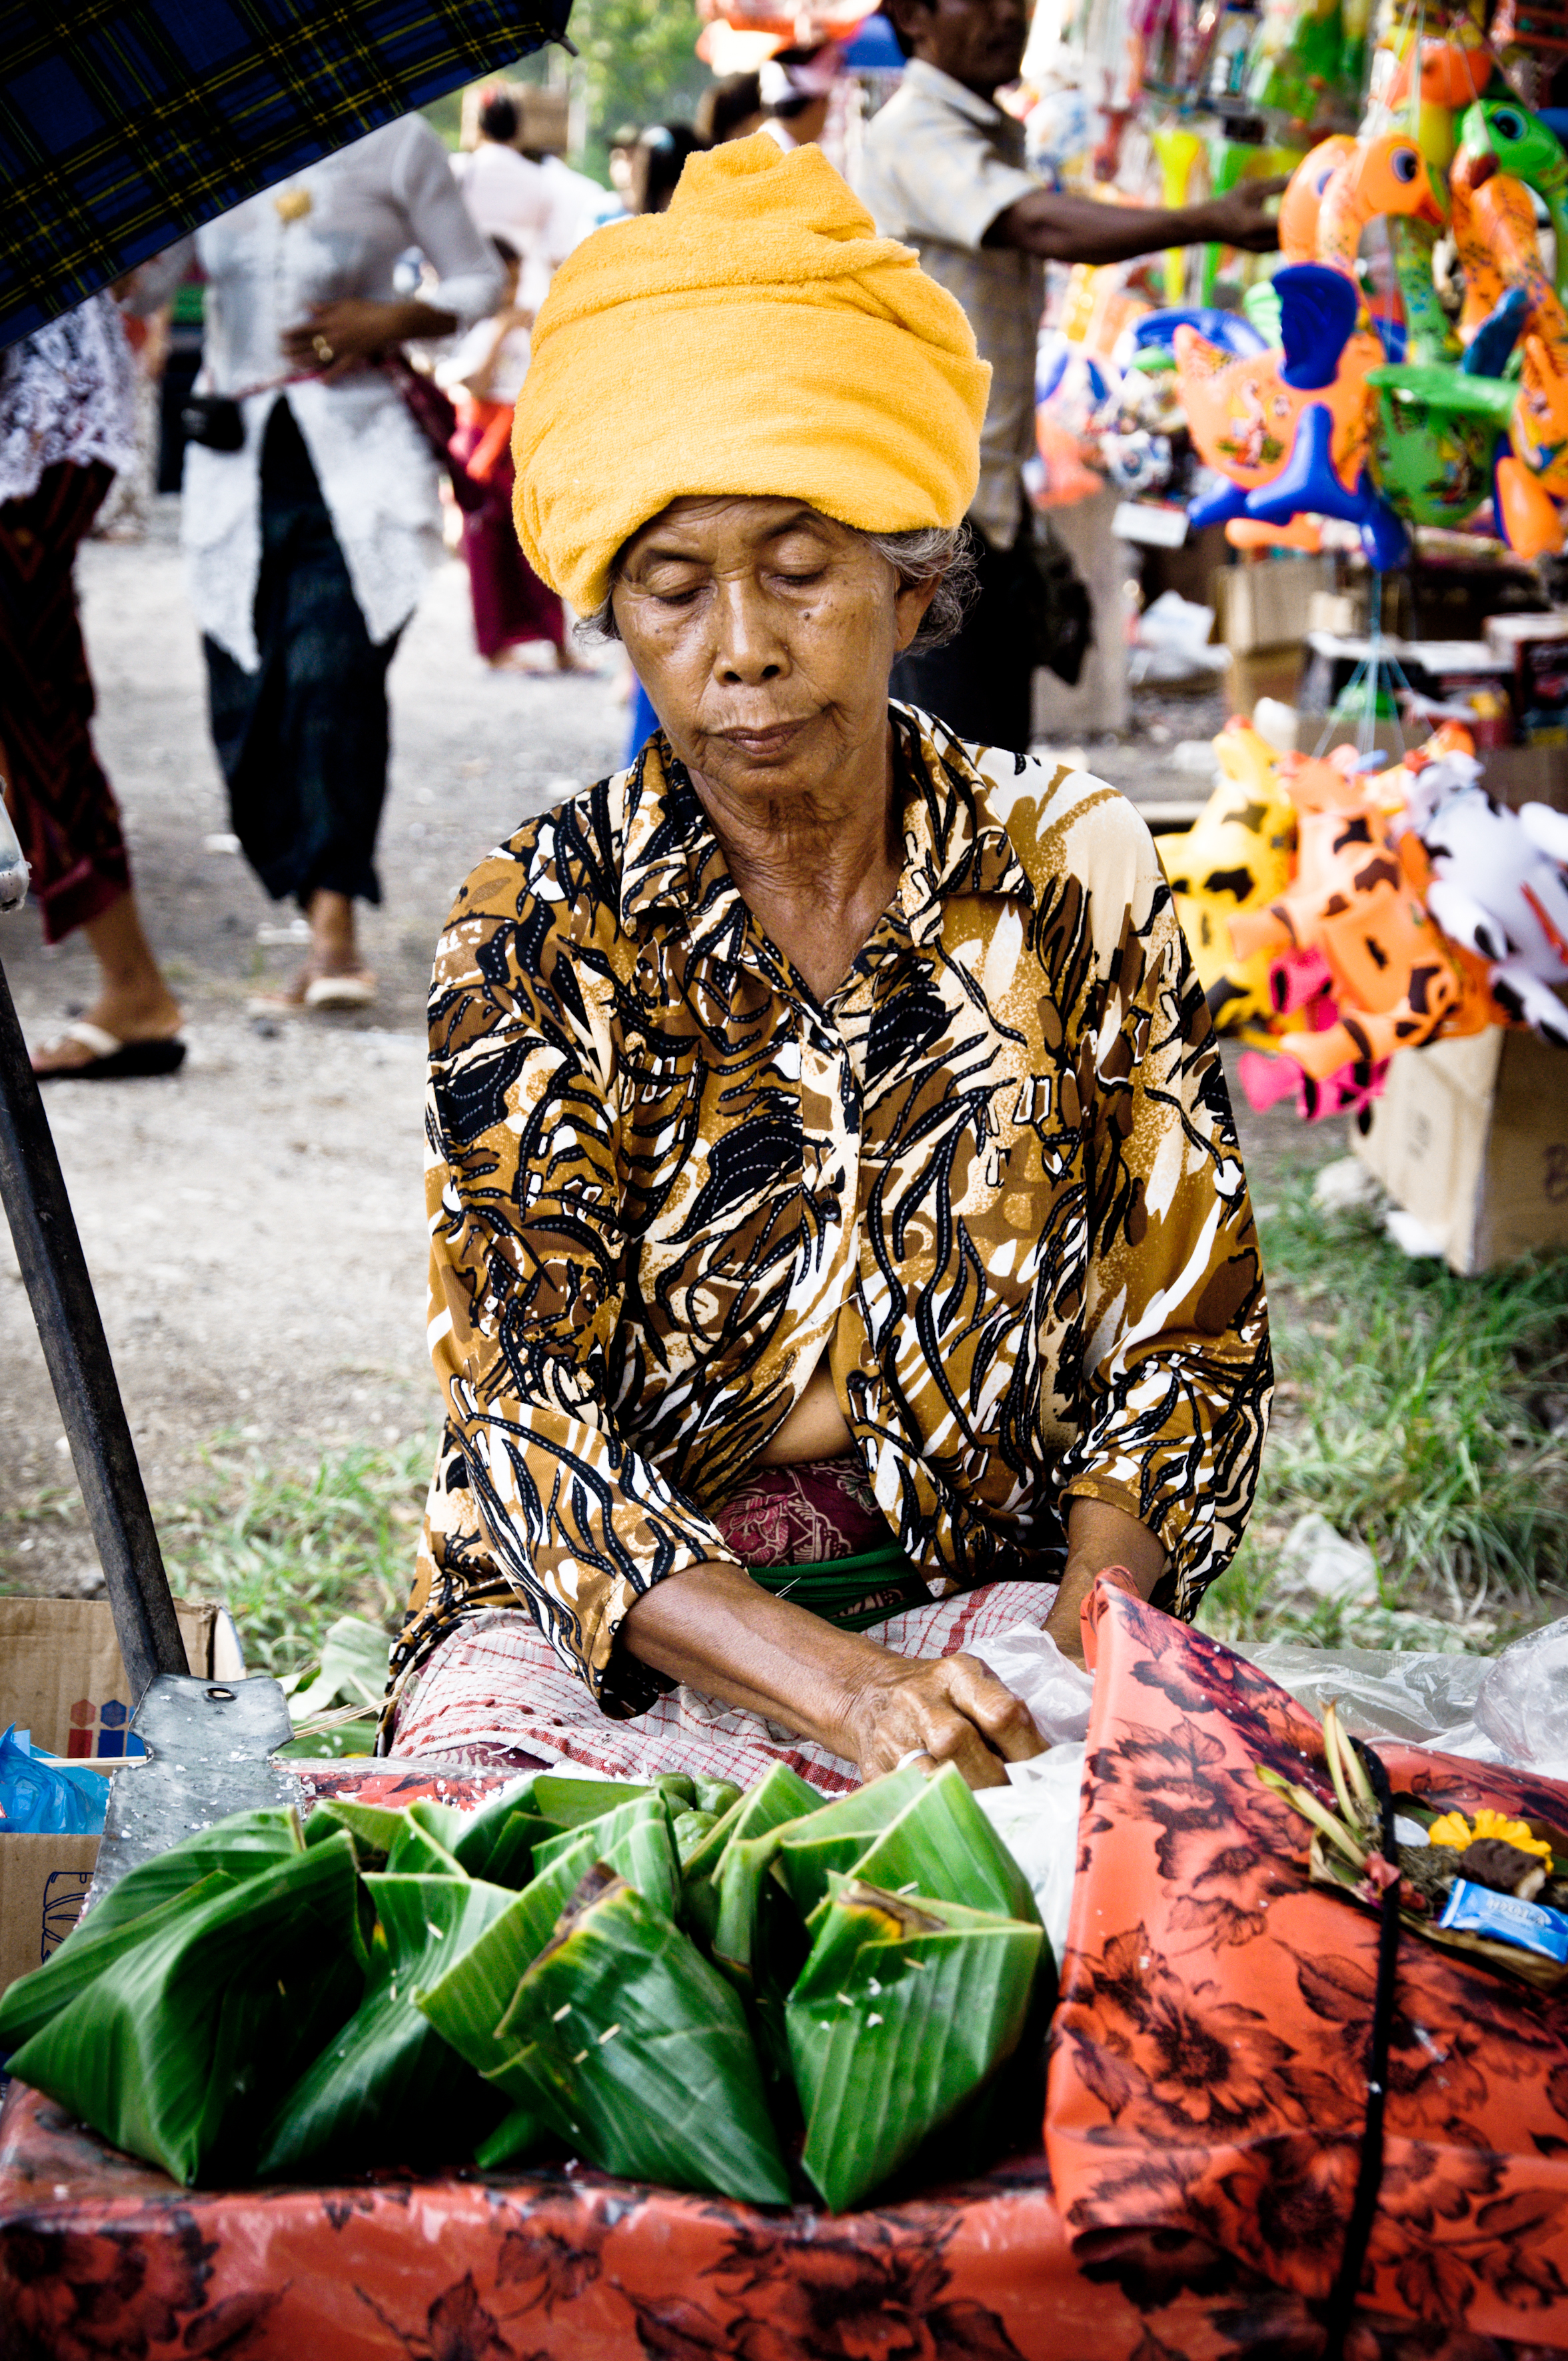 Street vendor selling food on the street photo